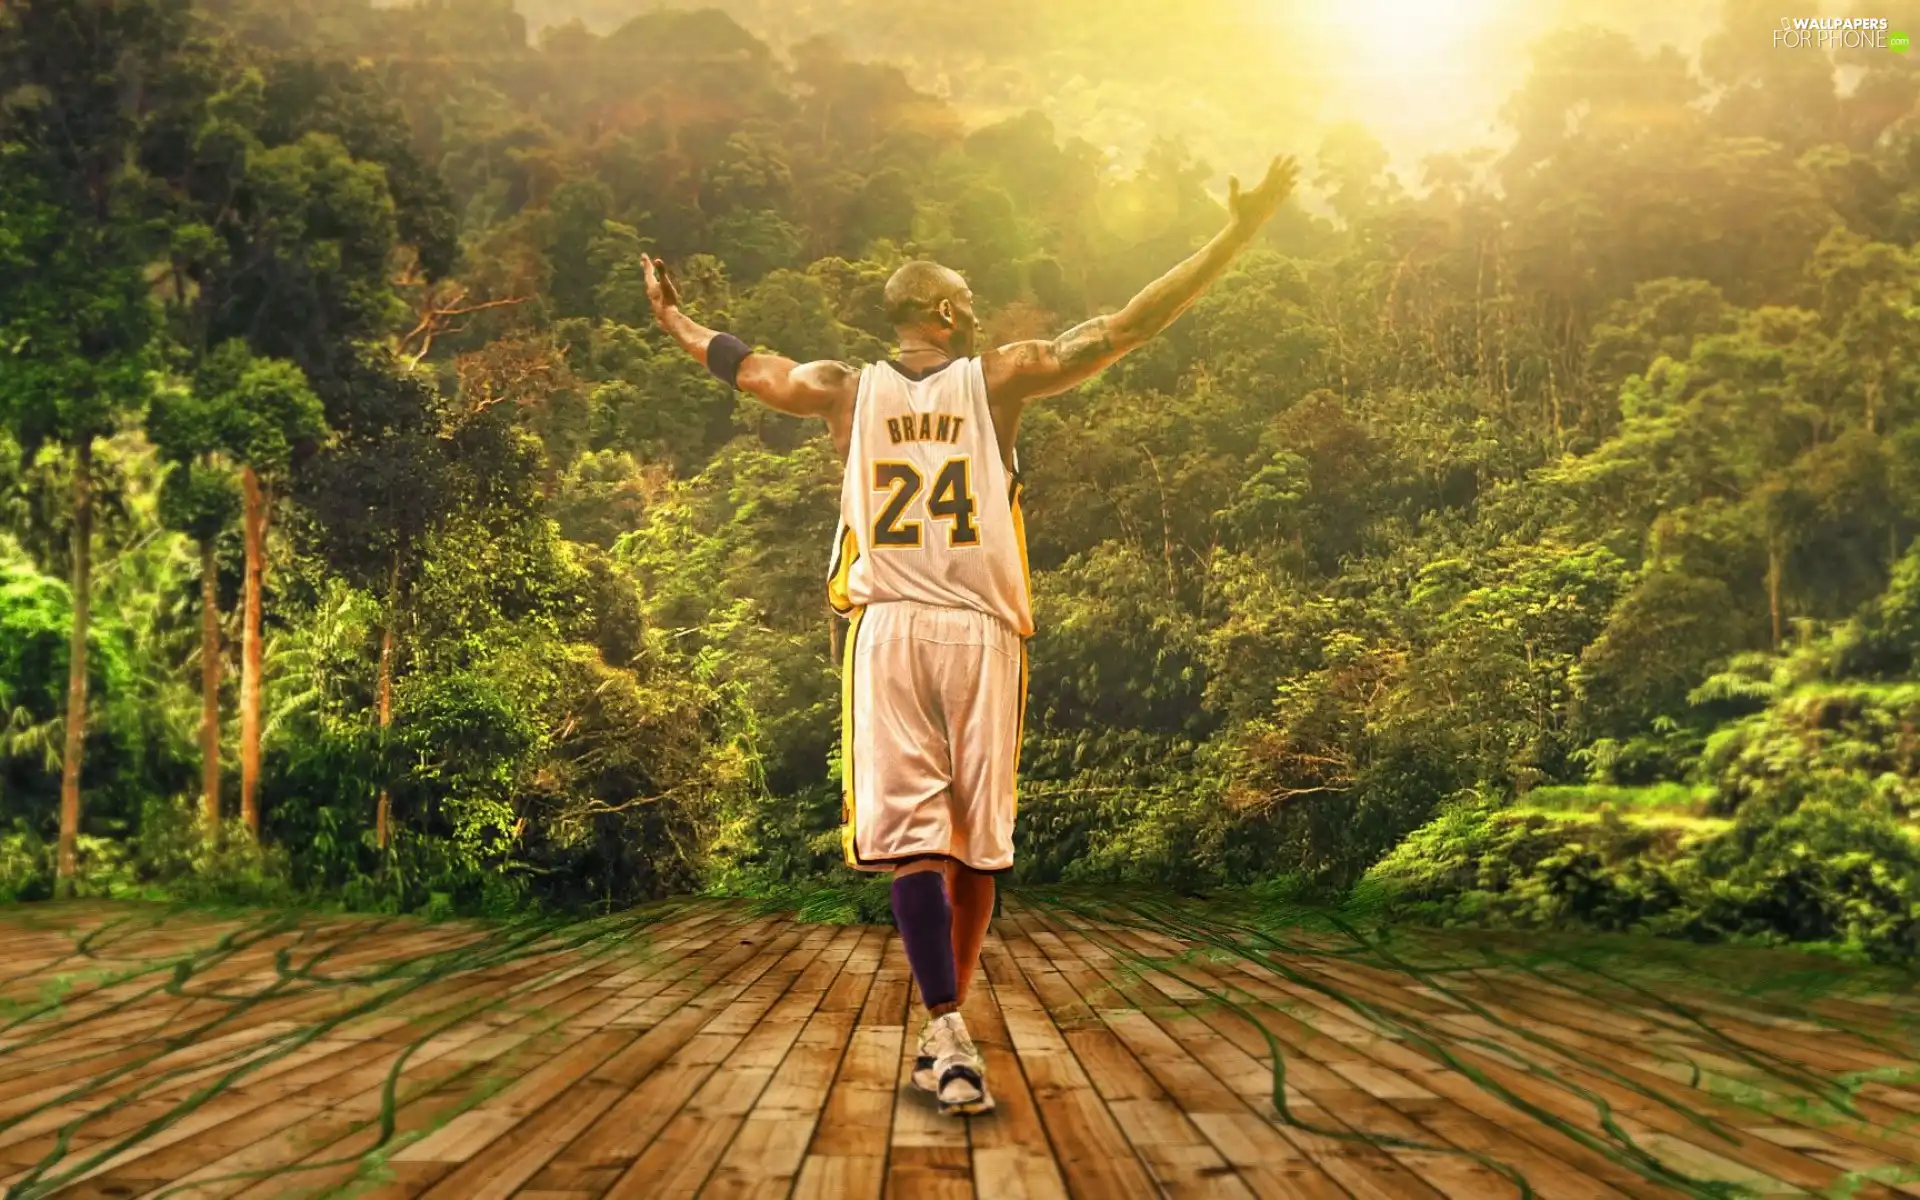 Kobe Bryant, jungle, basketball